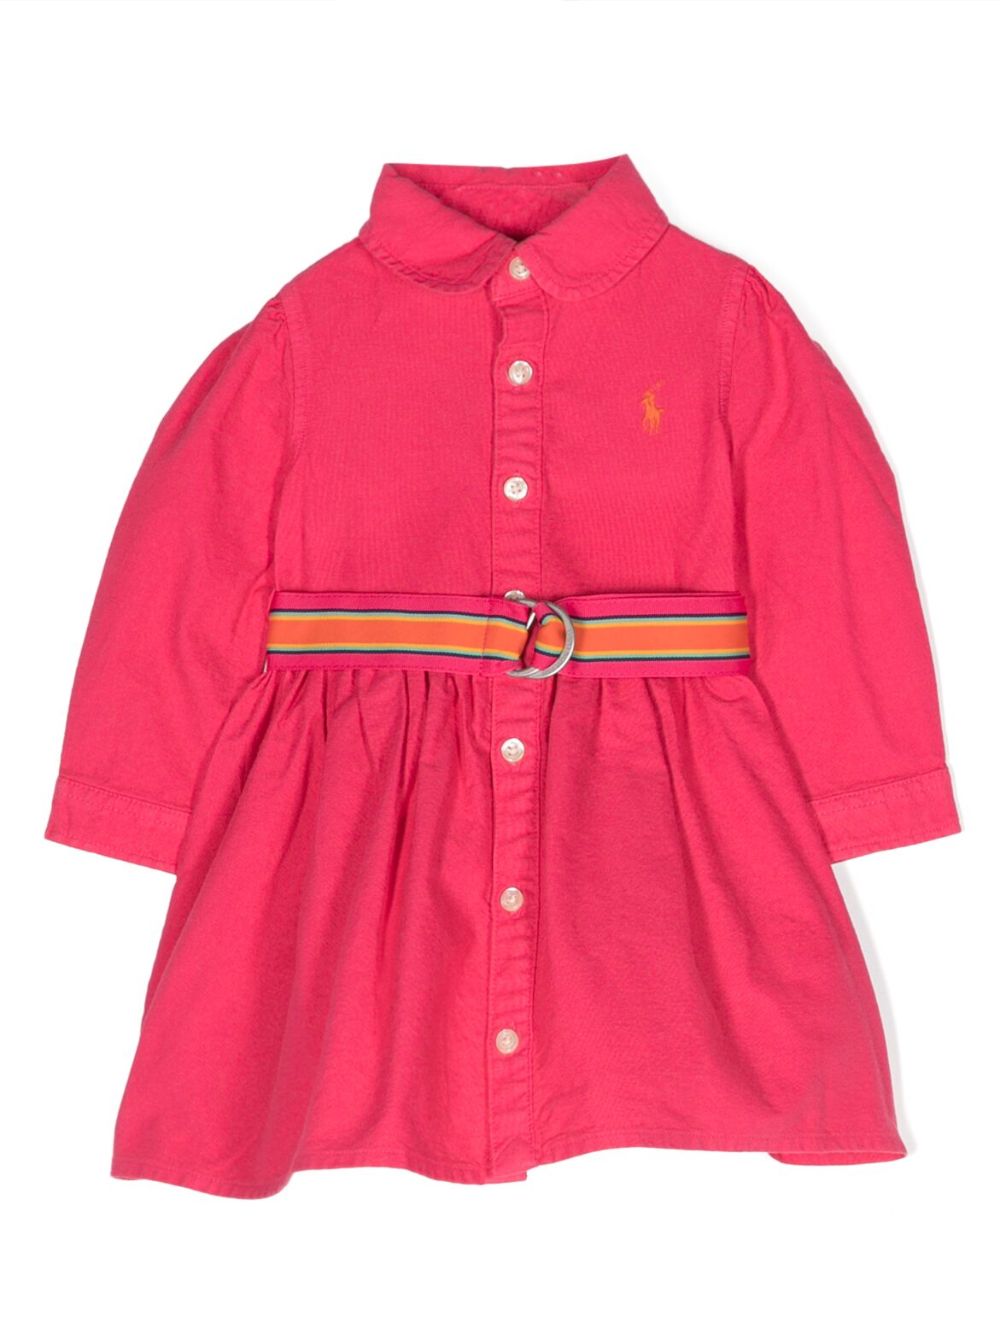 Robe bébé fille rose avec logo brodé